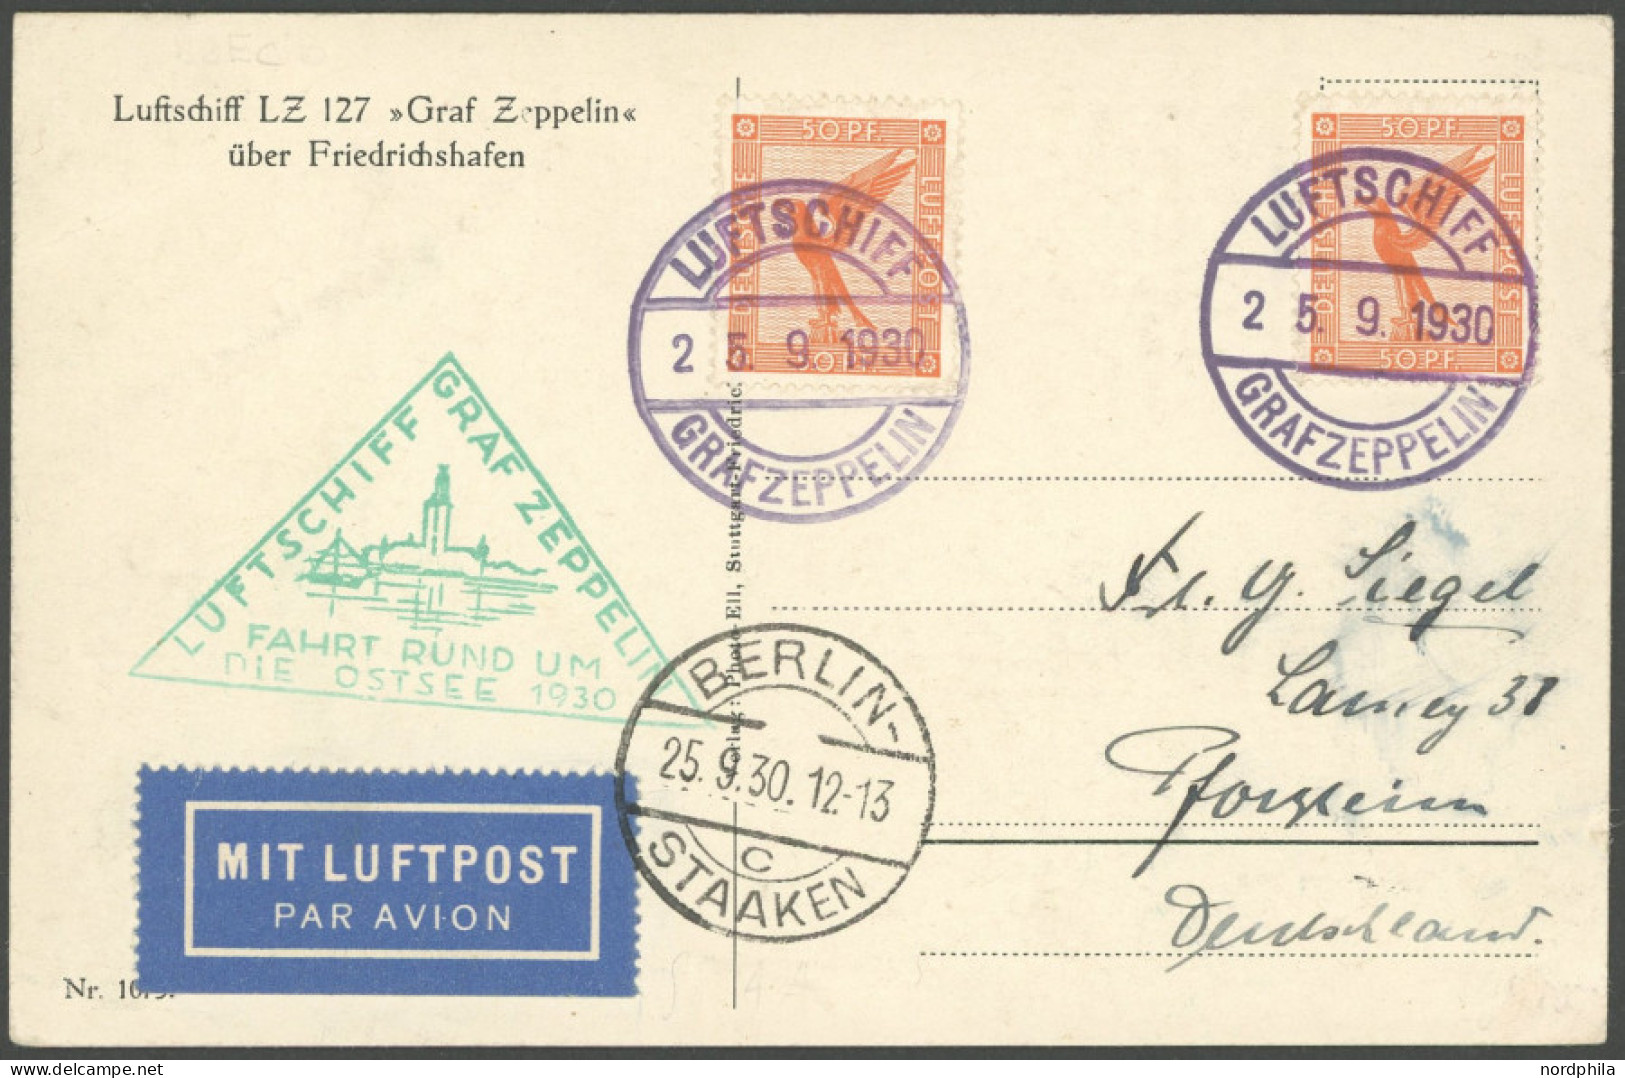 ZEPPELINPOST 88Ec BRIEF, 1930, Ostseefahrt, Bordpost Der Rückfahrt, Abgabe Berlin, Prachtkarte - Poste Aérienne & Zeppelin